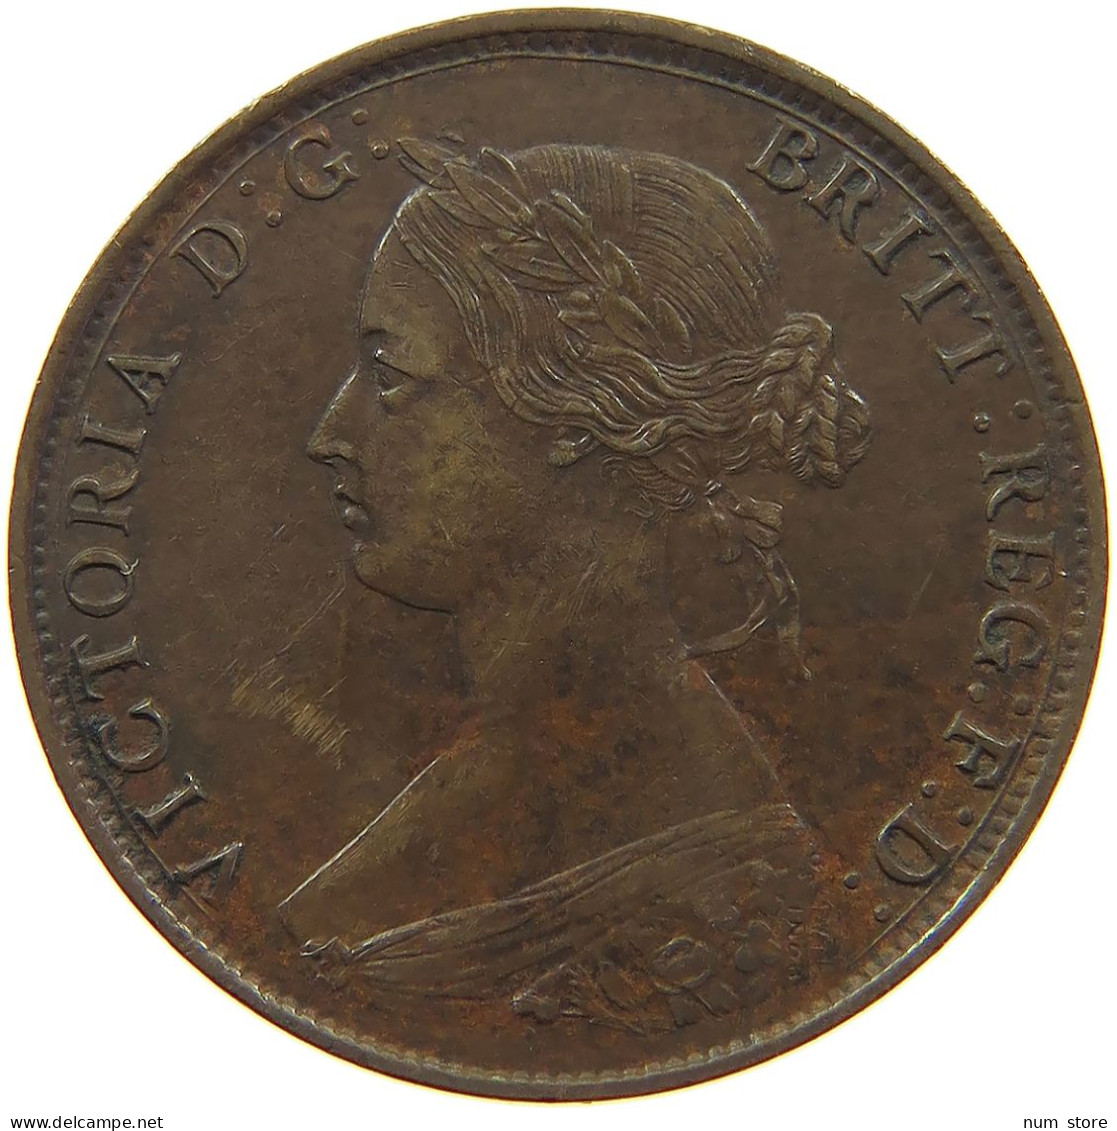 GREAT BRITAIN HALFPENNY 1861 Victoria 1837-1901 #s076 0203 - C. 1/2 Penny